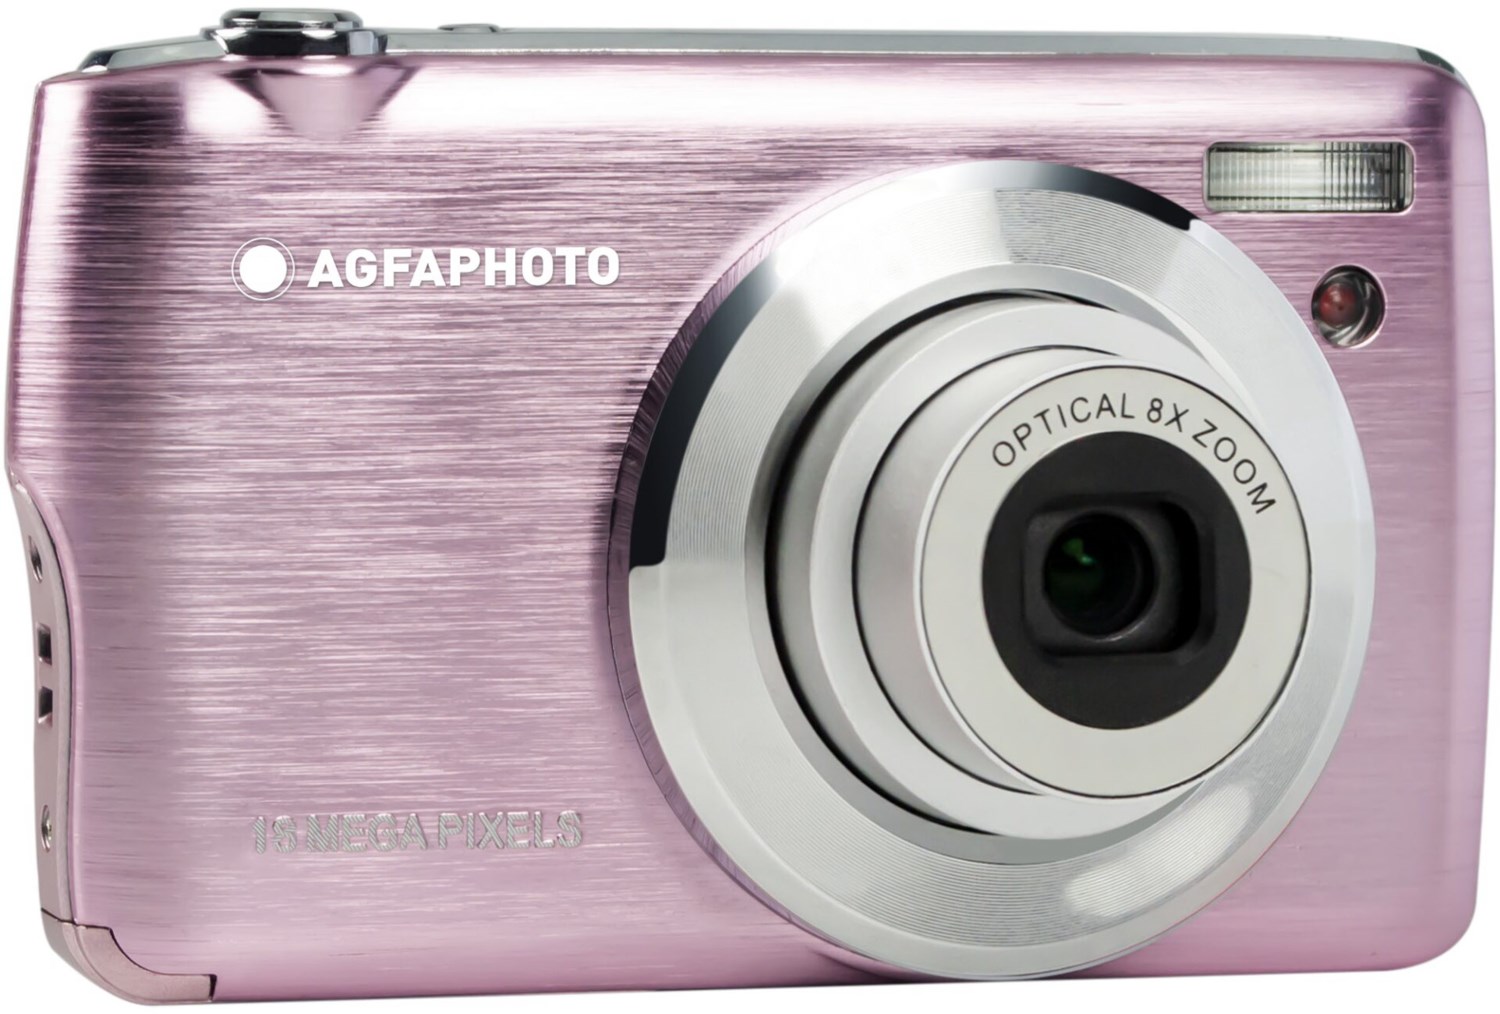 Realishot DC8200 Digitale Kompaktkamera pink